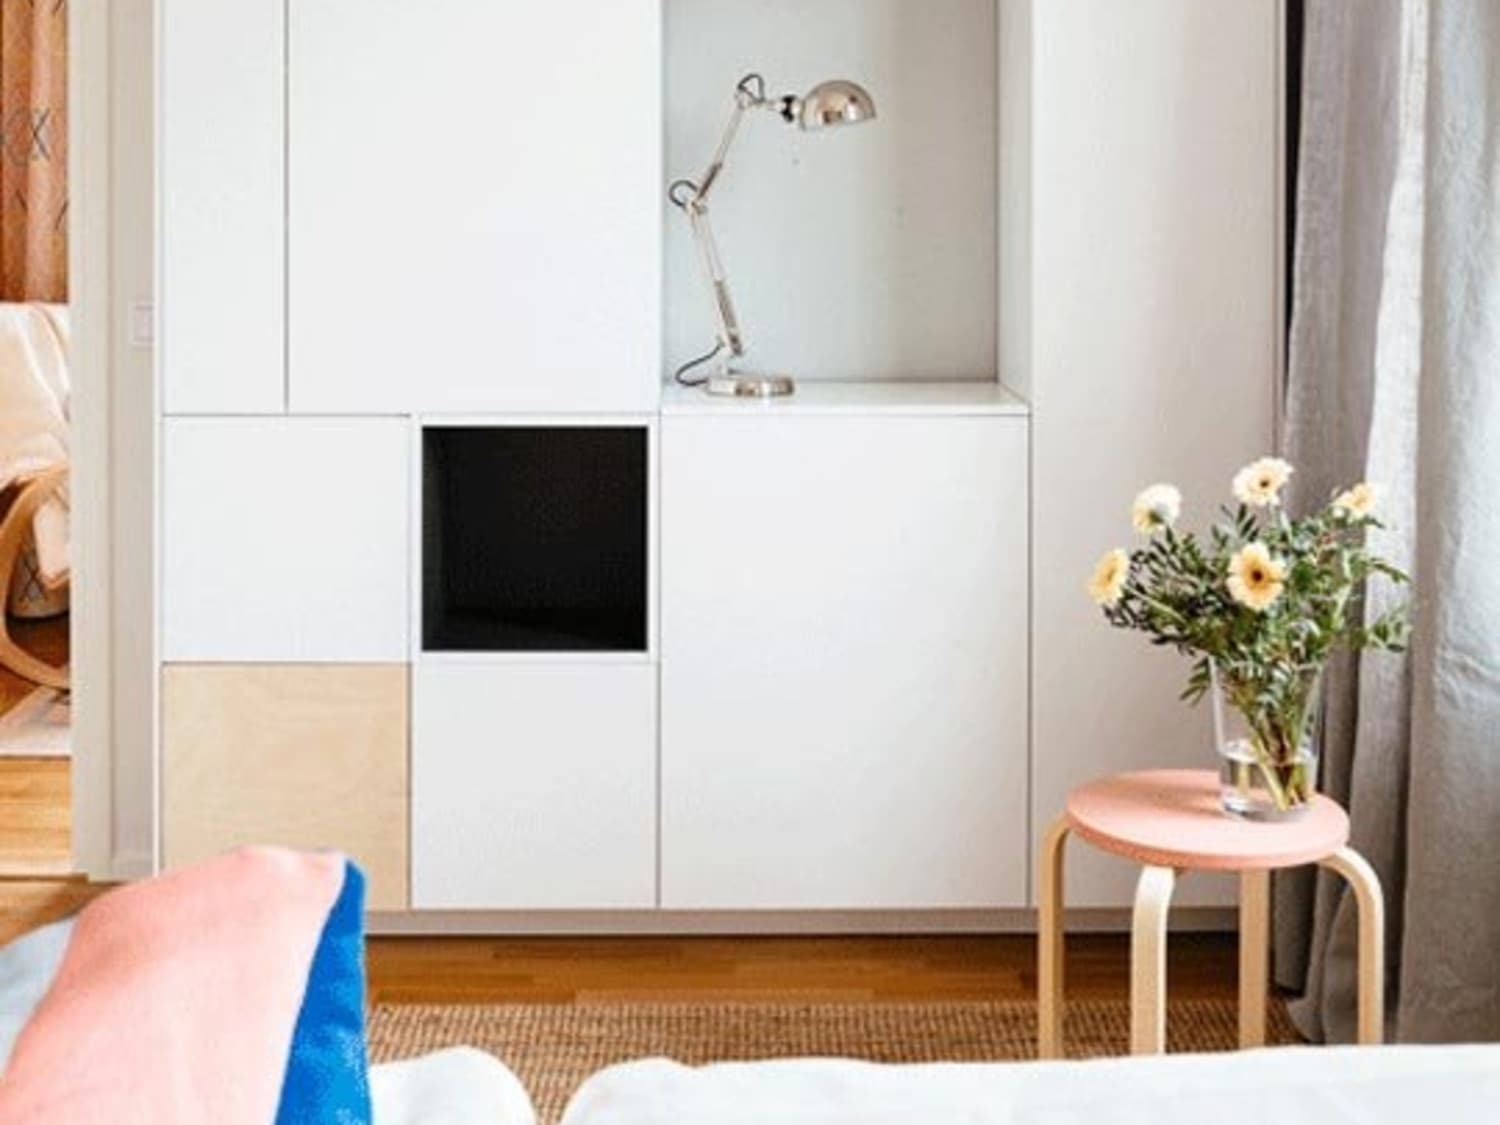 Living room of a stylist: Sasa's modern take on tradition - IKEA